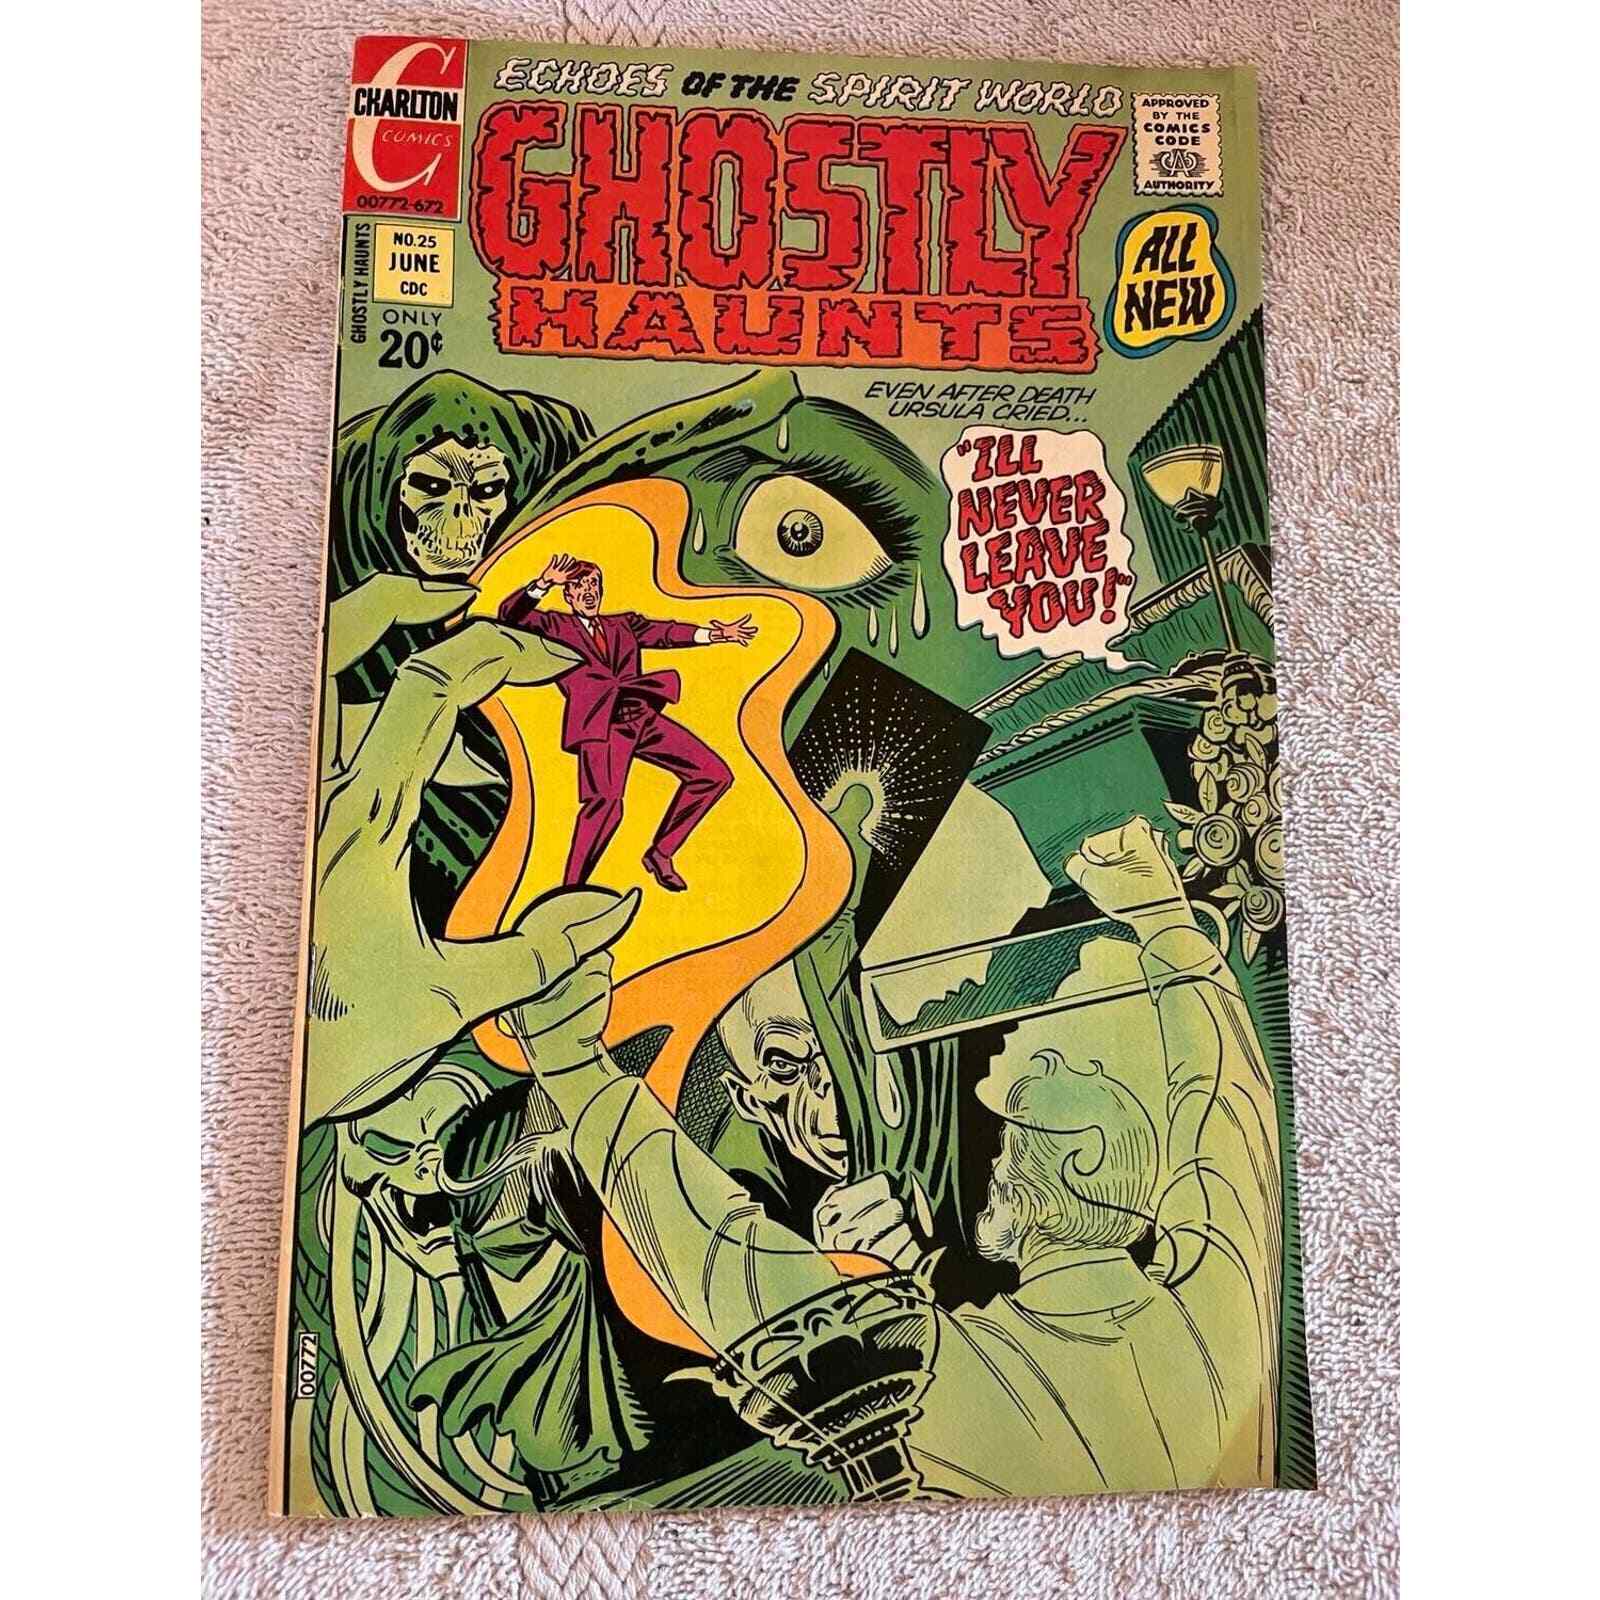 GHOSTLY HAUNTS #25 - 1972 CHARLTON HORROR VG+